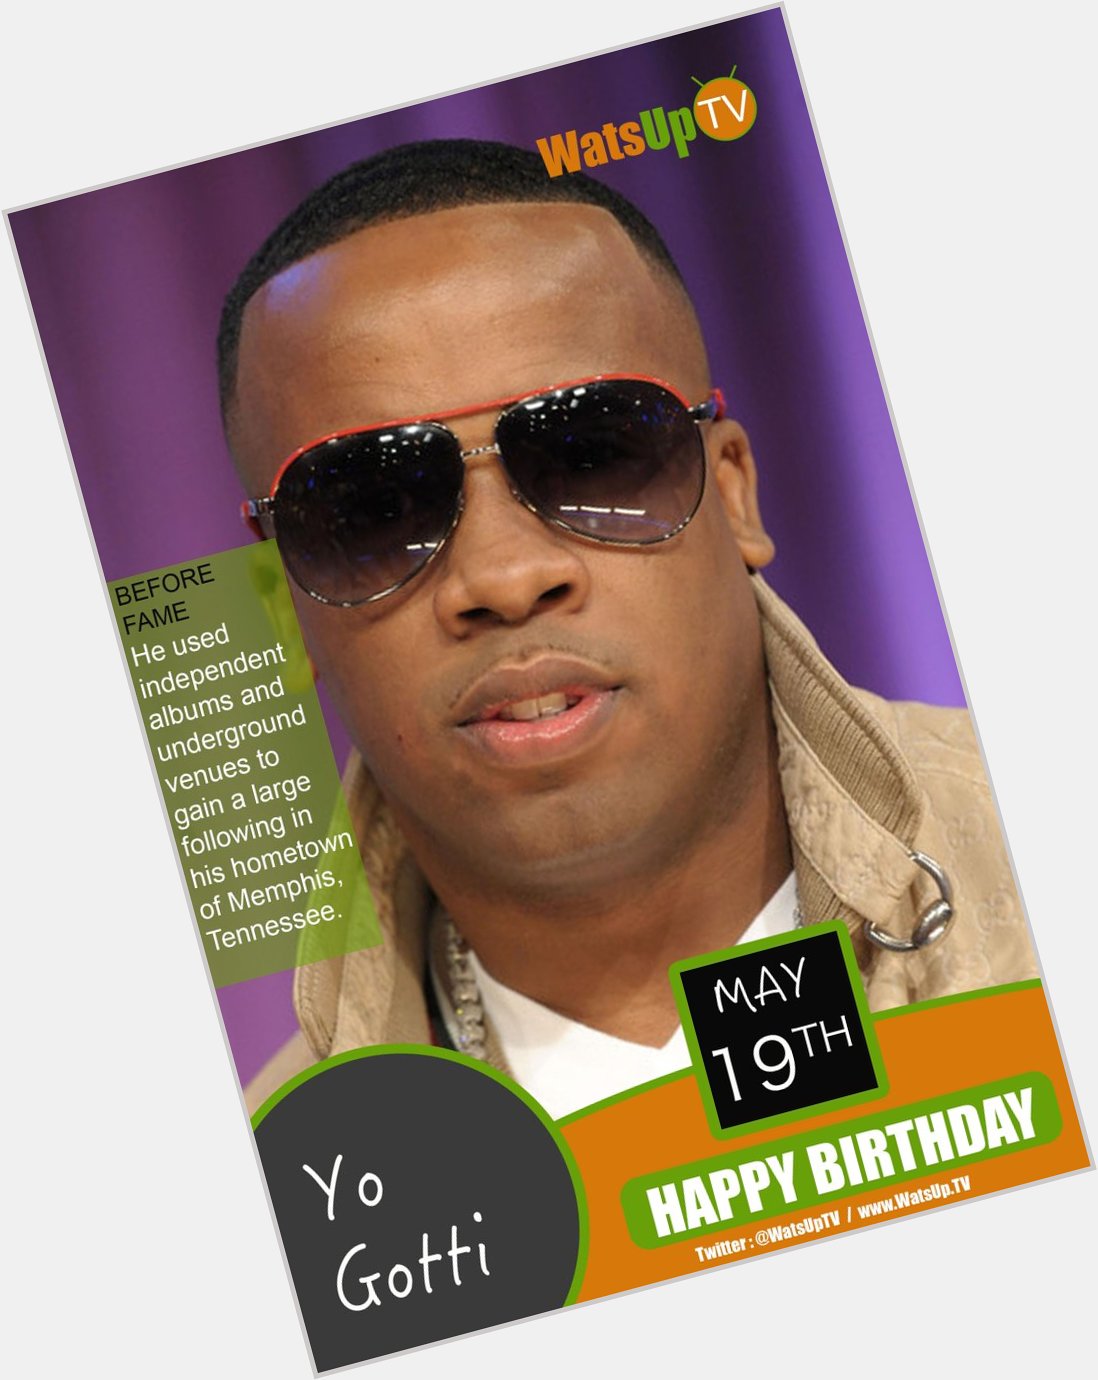 \" HAPPY BIRTHDAY : Yo Gotti ( ) are u guyz aware today\s birthday?